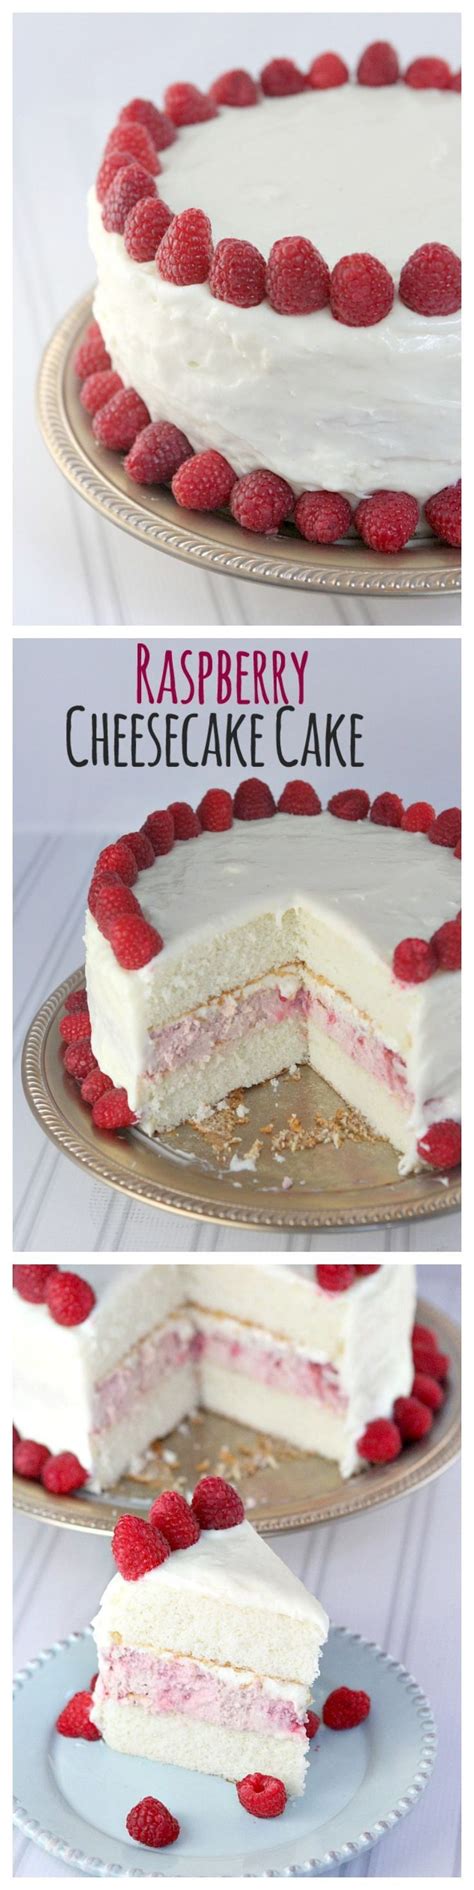 Raspberry Cheesecake Cake Recipe Cheesecake Cake Recipes Desserts Cake